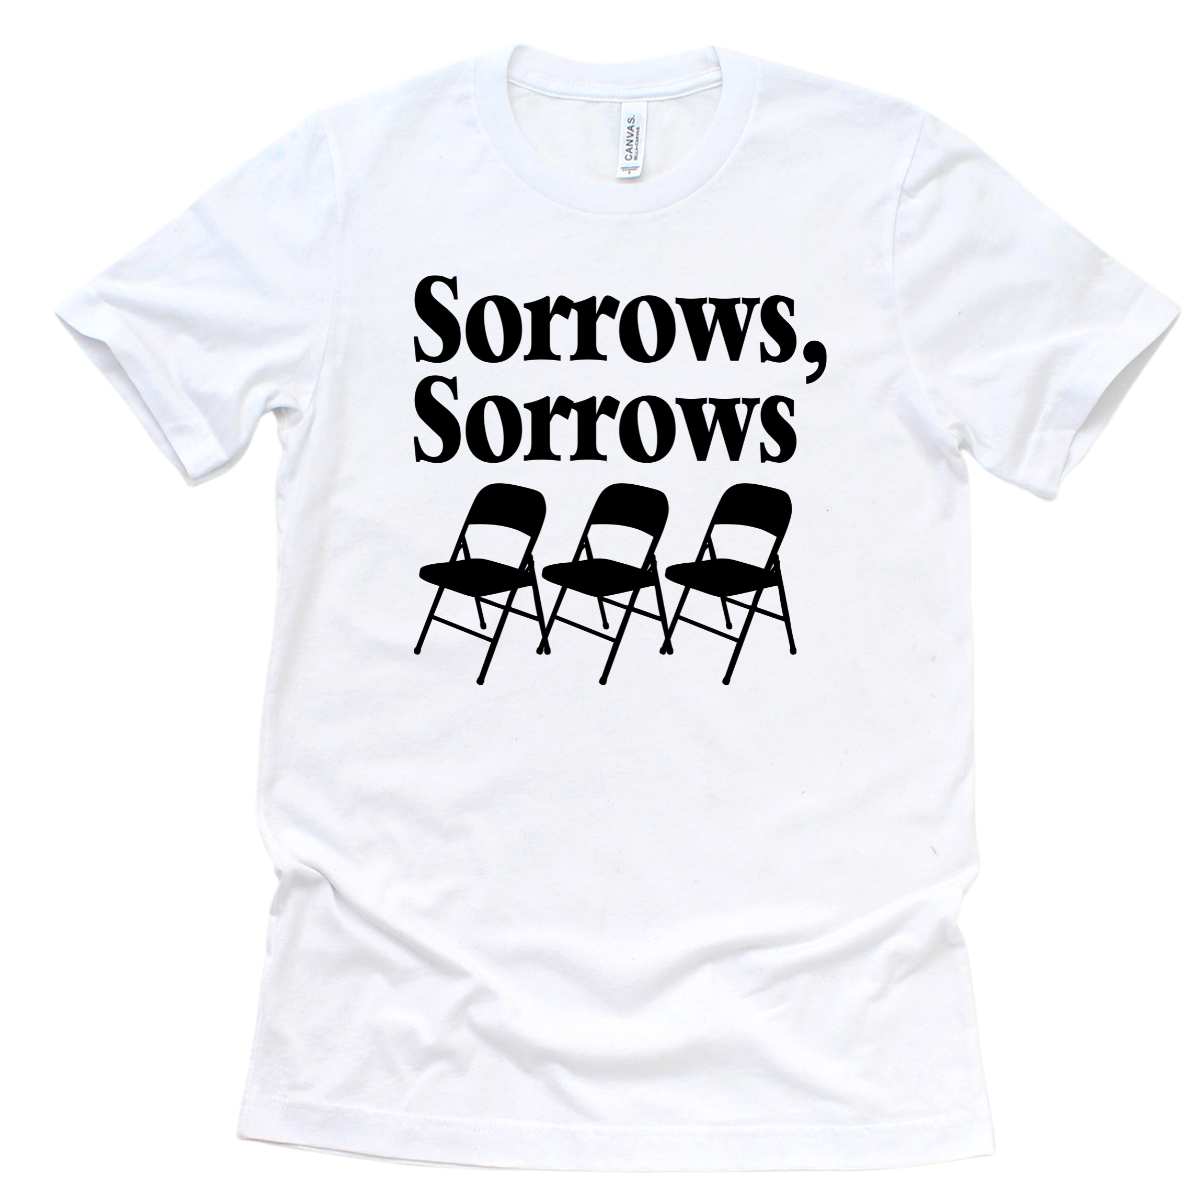 Sorrows. Sorrows. Chairs. Tee